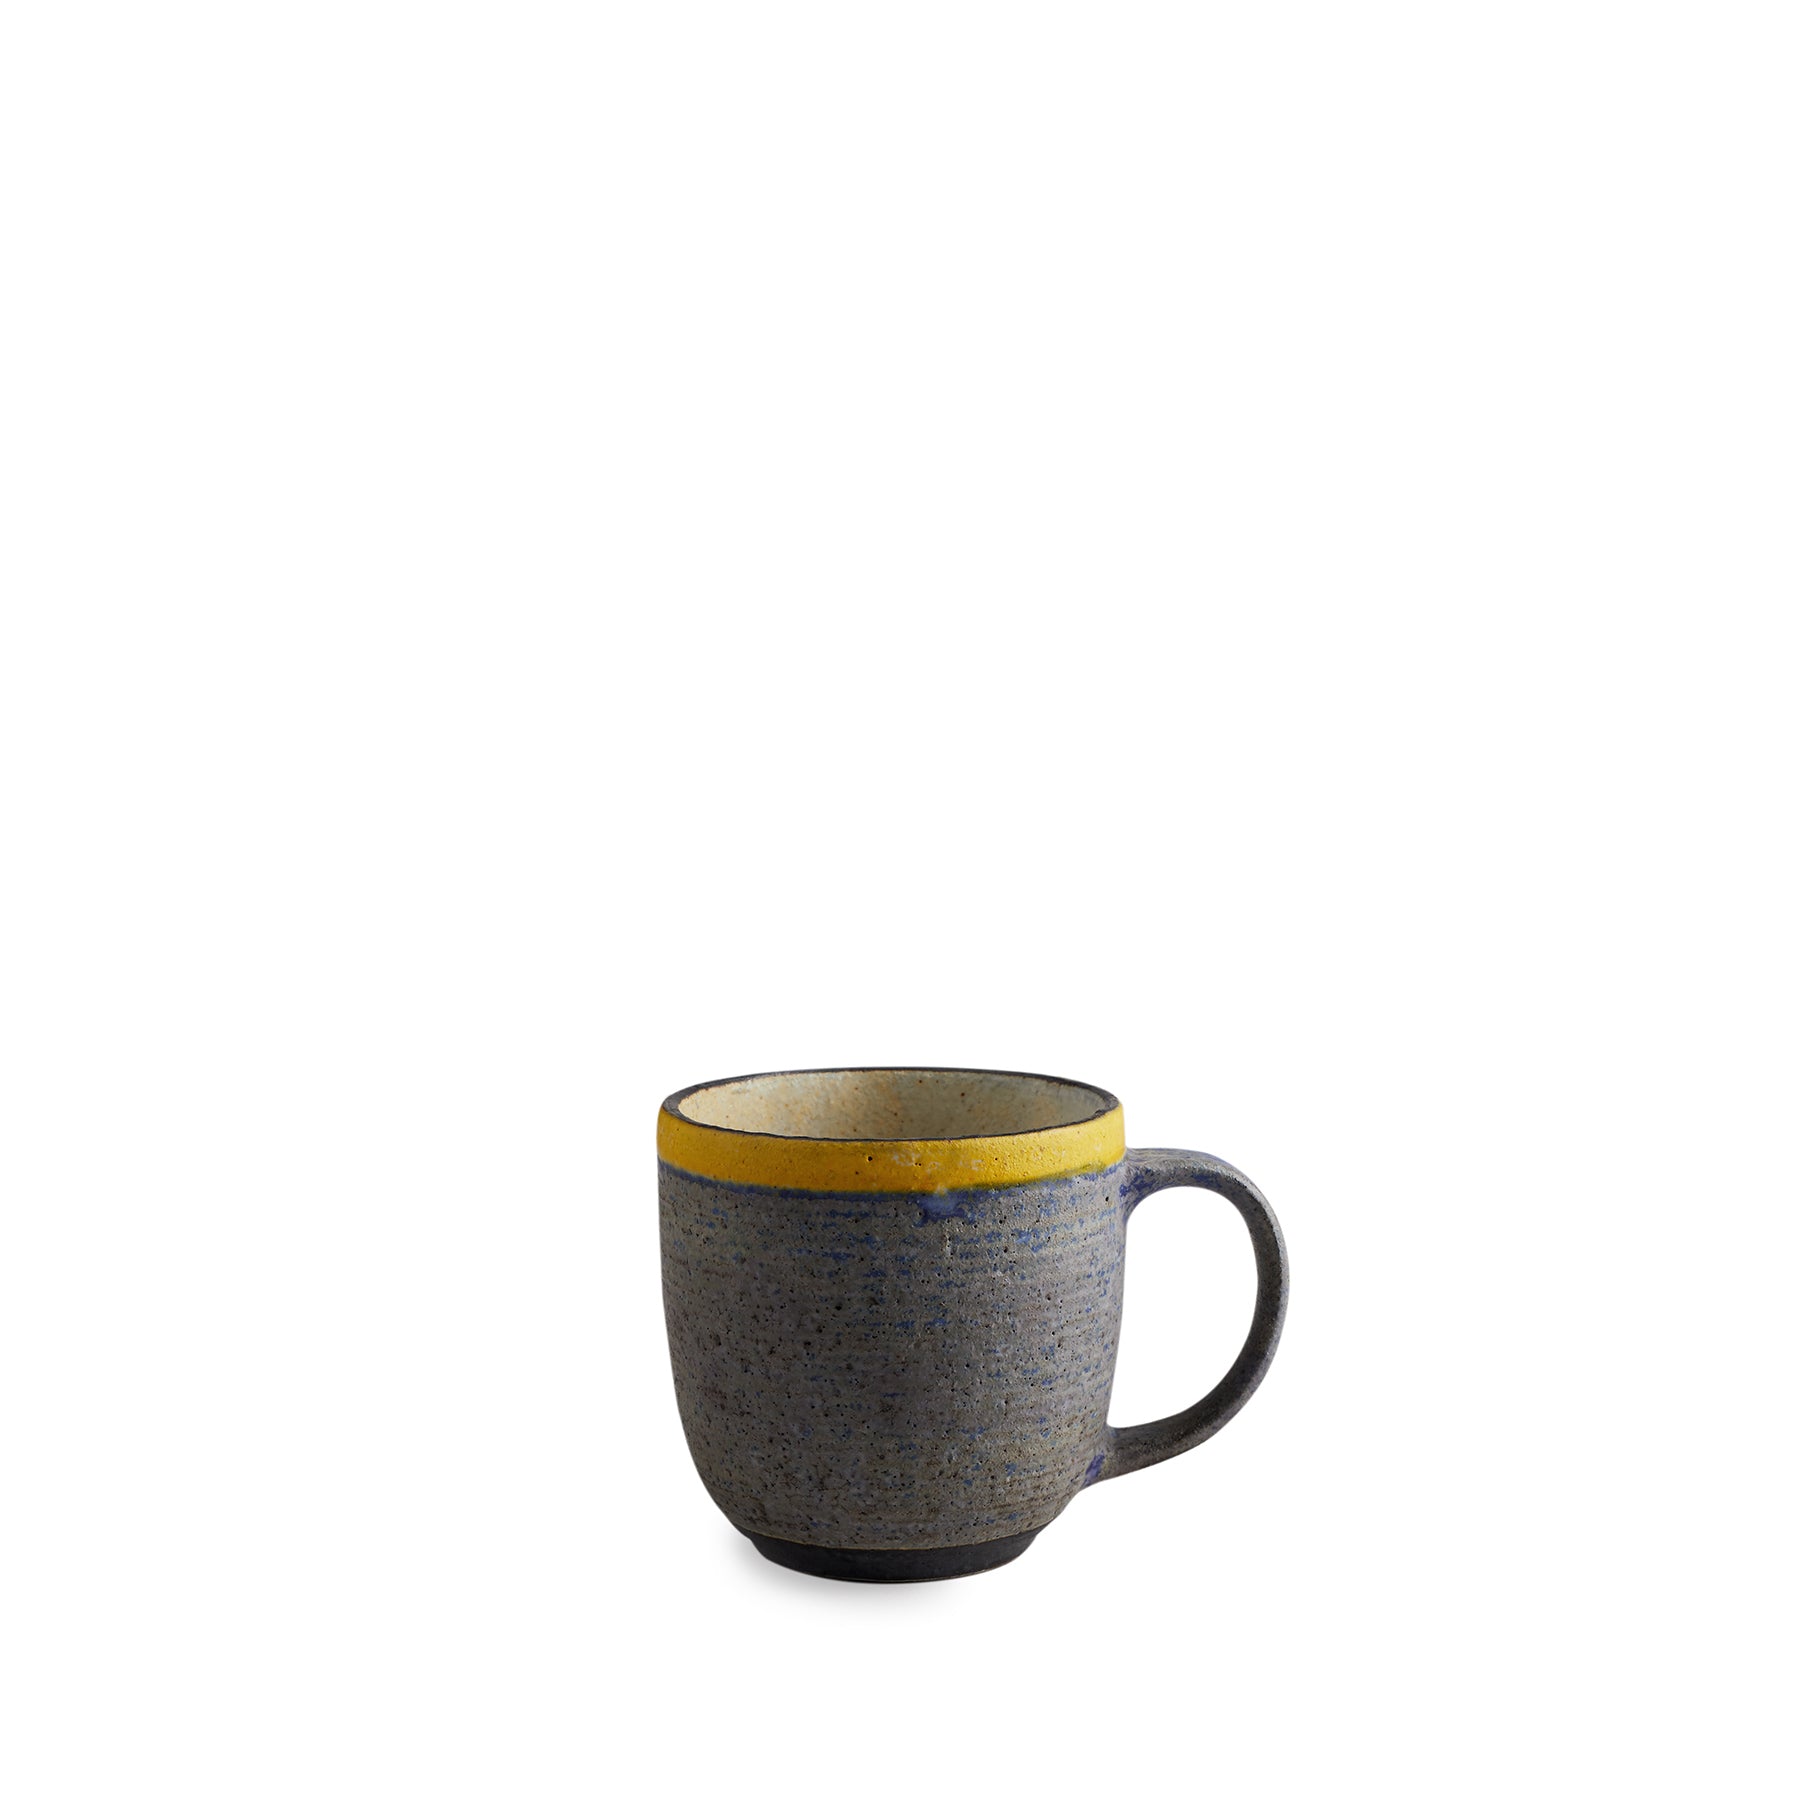 #23 Mug in Indigo with Yellow Ring Zoom Image 1